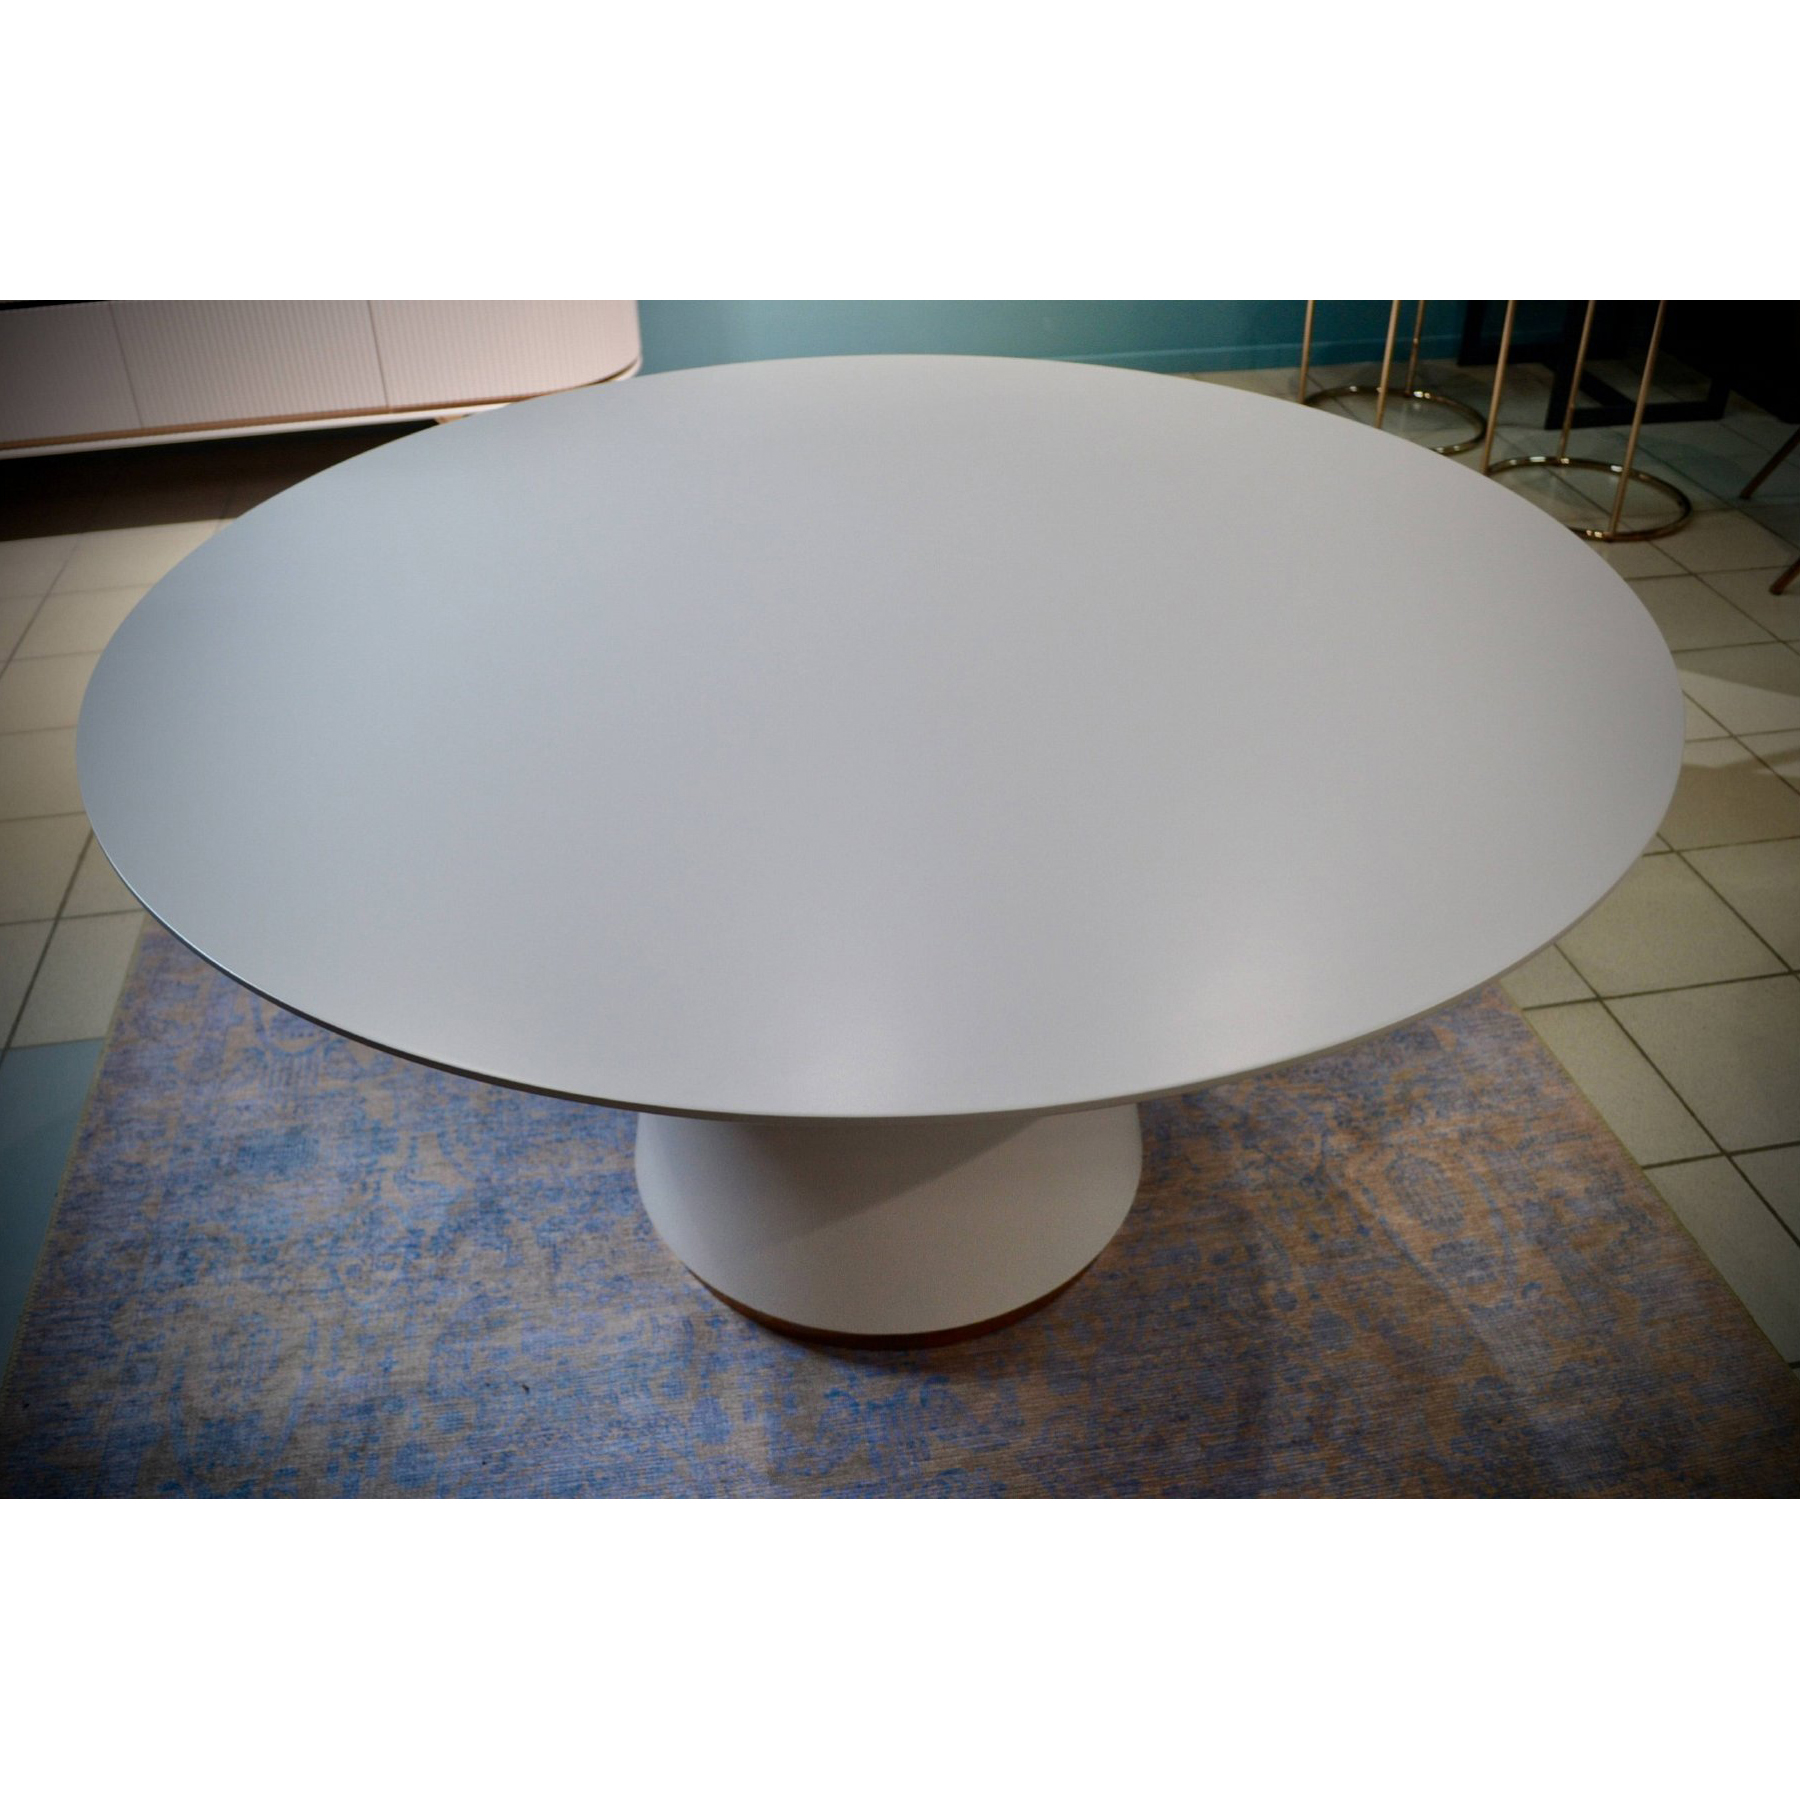 Стол обеденный Enza Home Vienna, круглый, размер 140х140х76 см, цвет пудровый07.182.0551.0000.0000.0019.